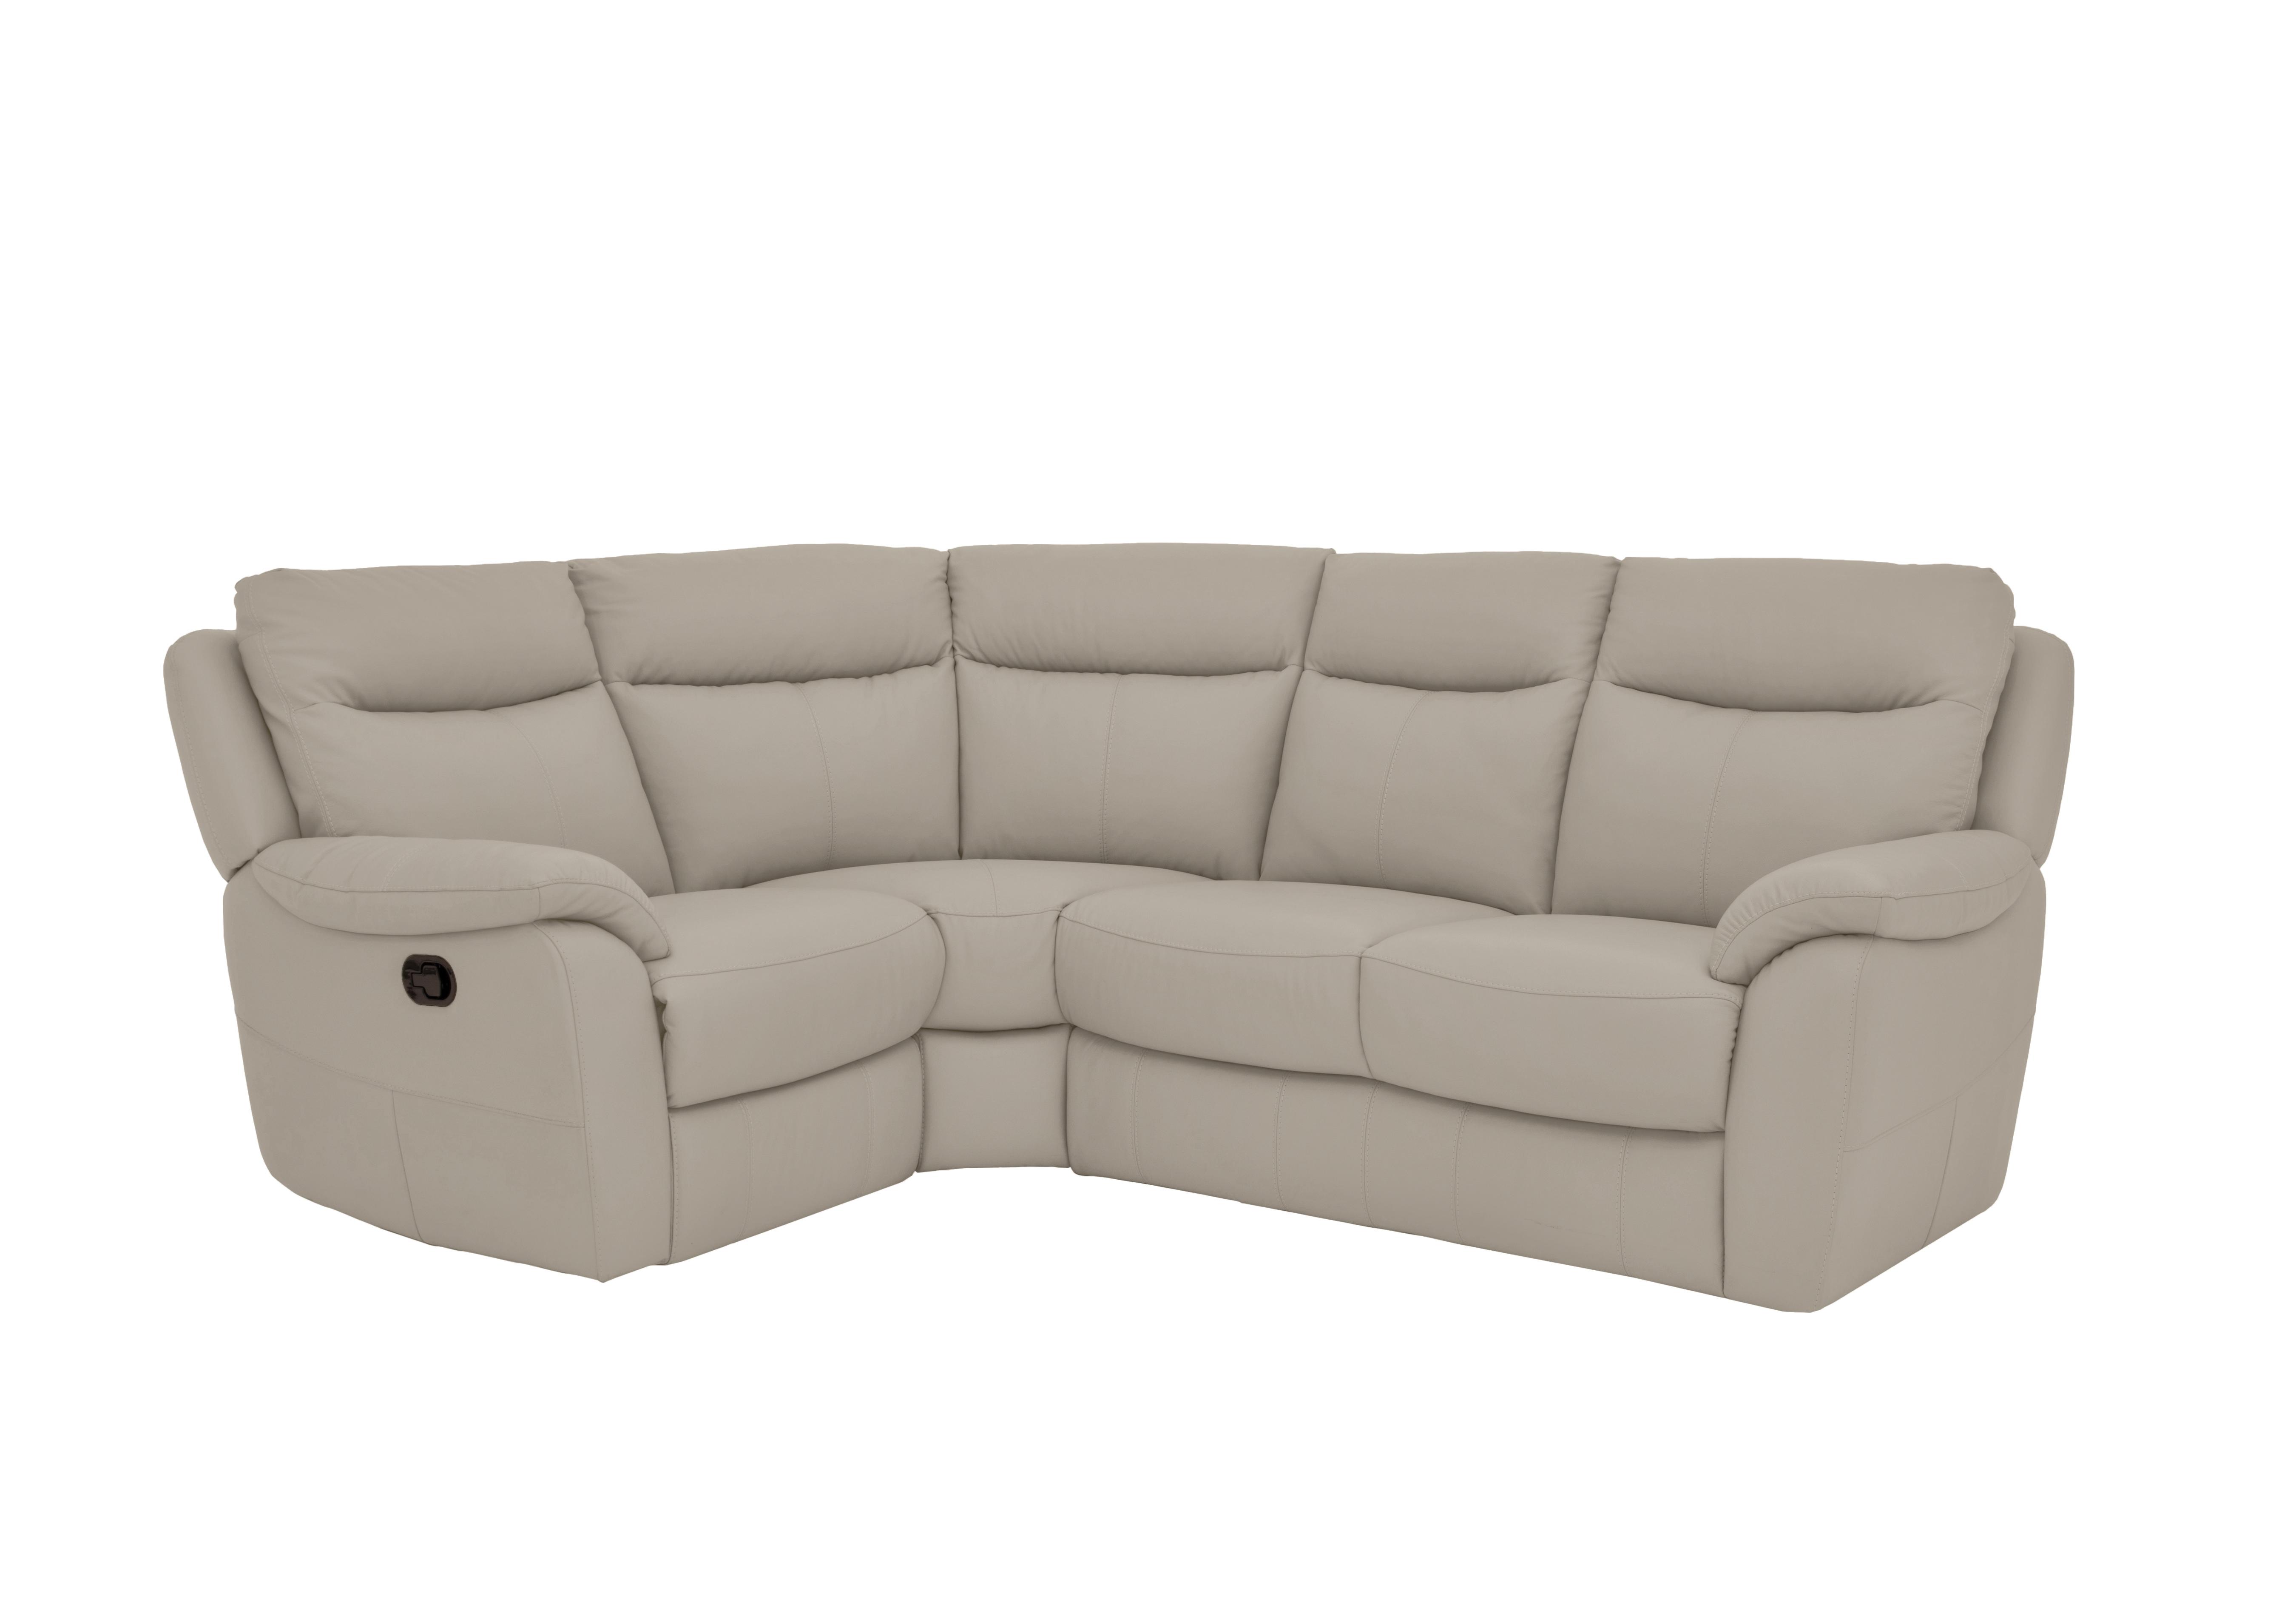 Snug Compact Leather Corner Sofa in Bv-946b Silver Grey on Furniture Village